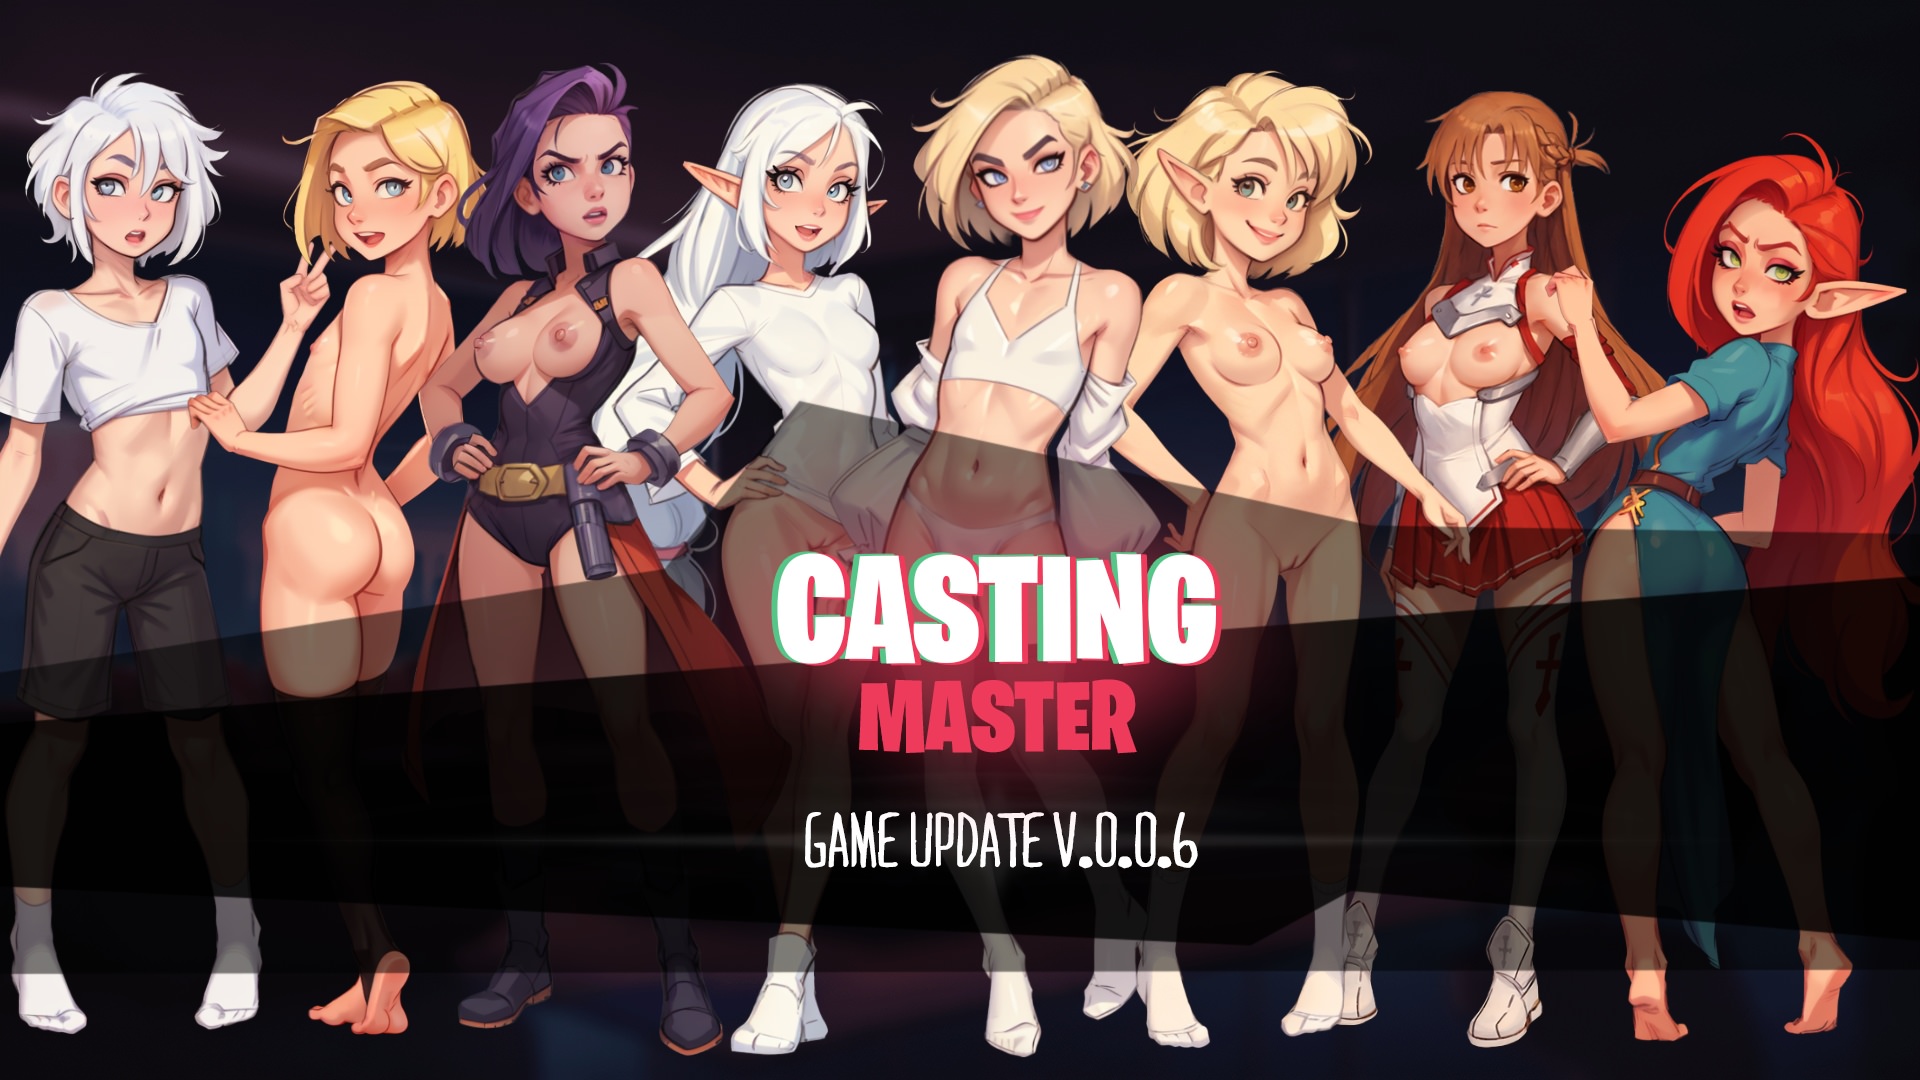 Casting master porn game